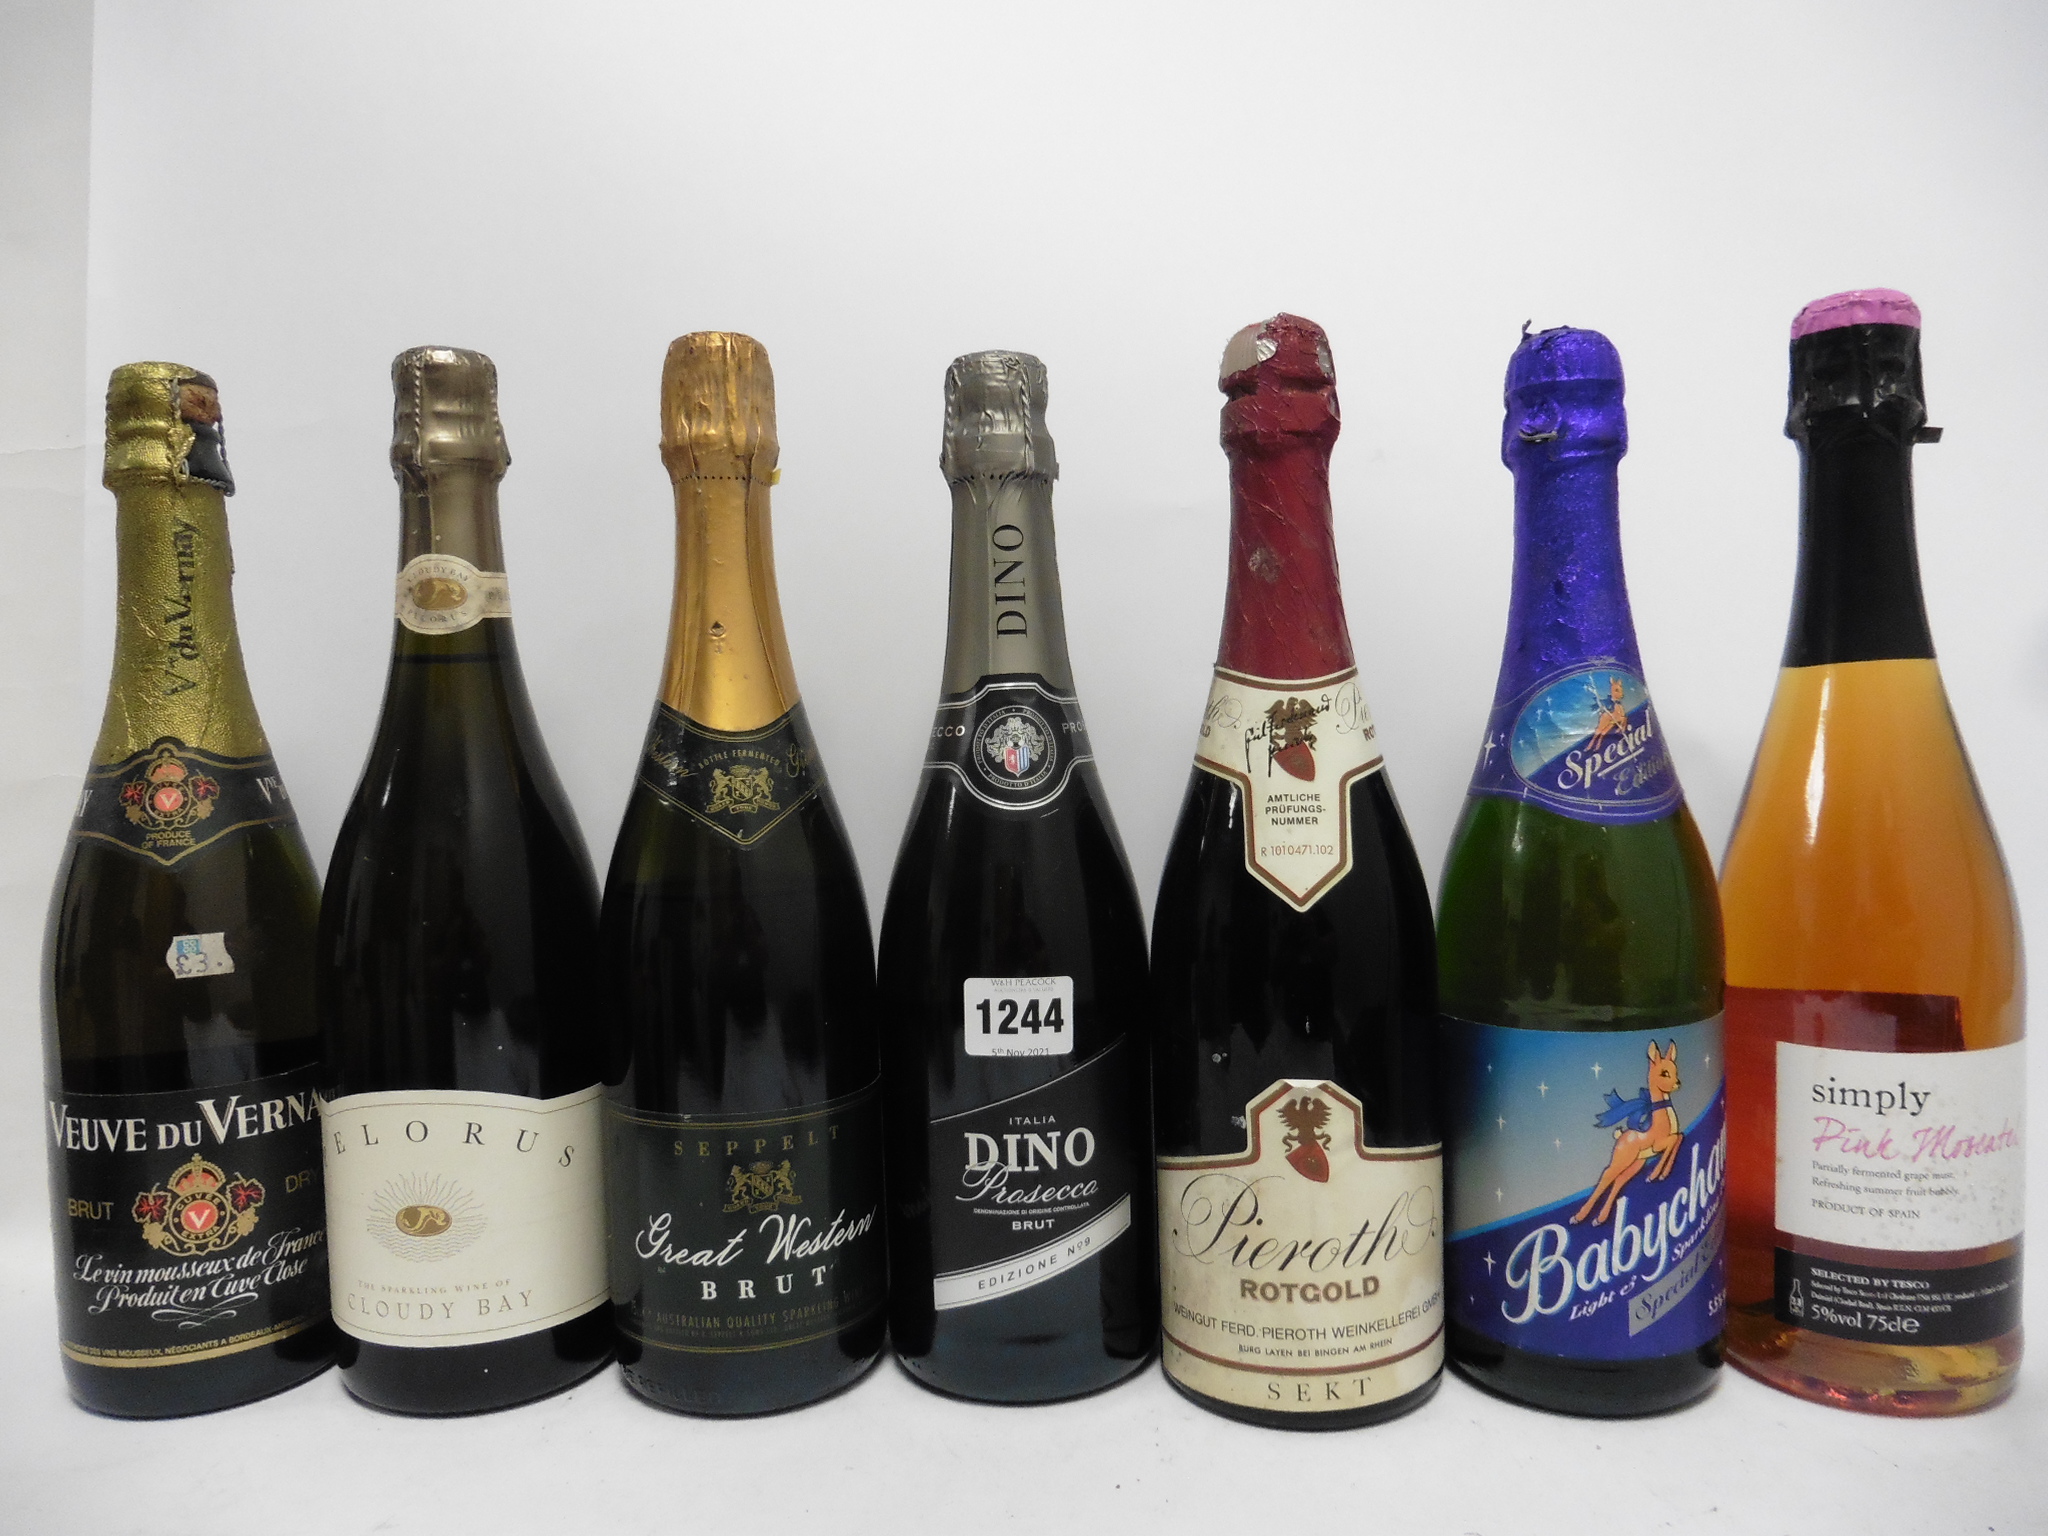 7 bottles sparkling wines, 1x Dino Prosecco Brut, 1x Babycham, 1x Pieroth Rotgold Sekt,